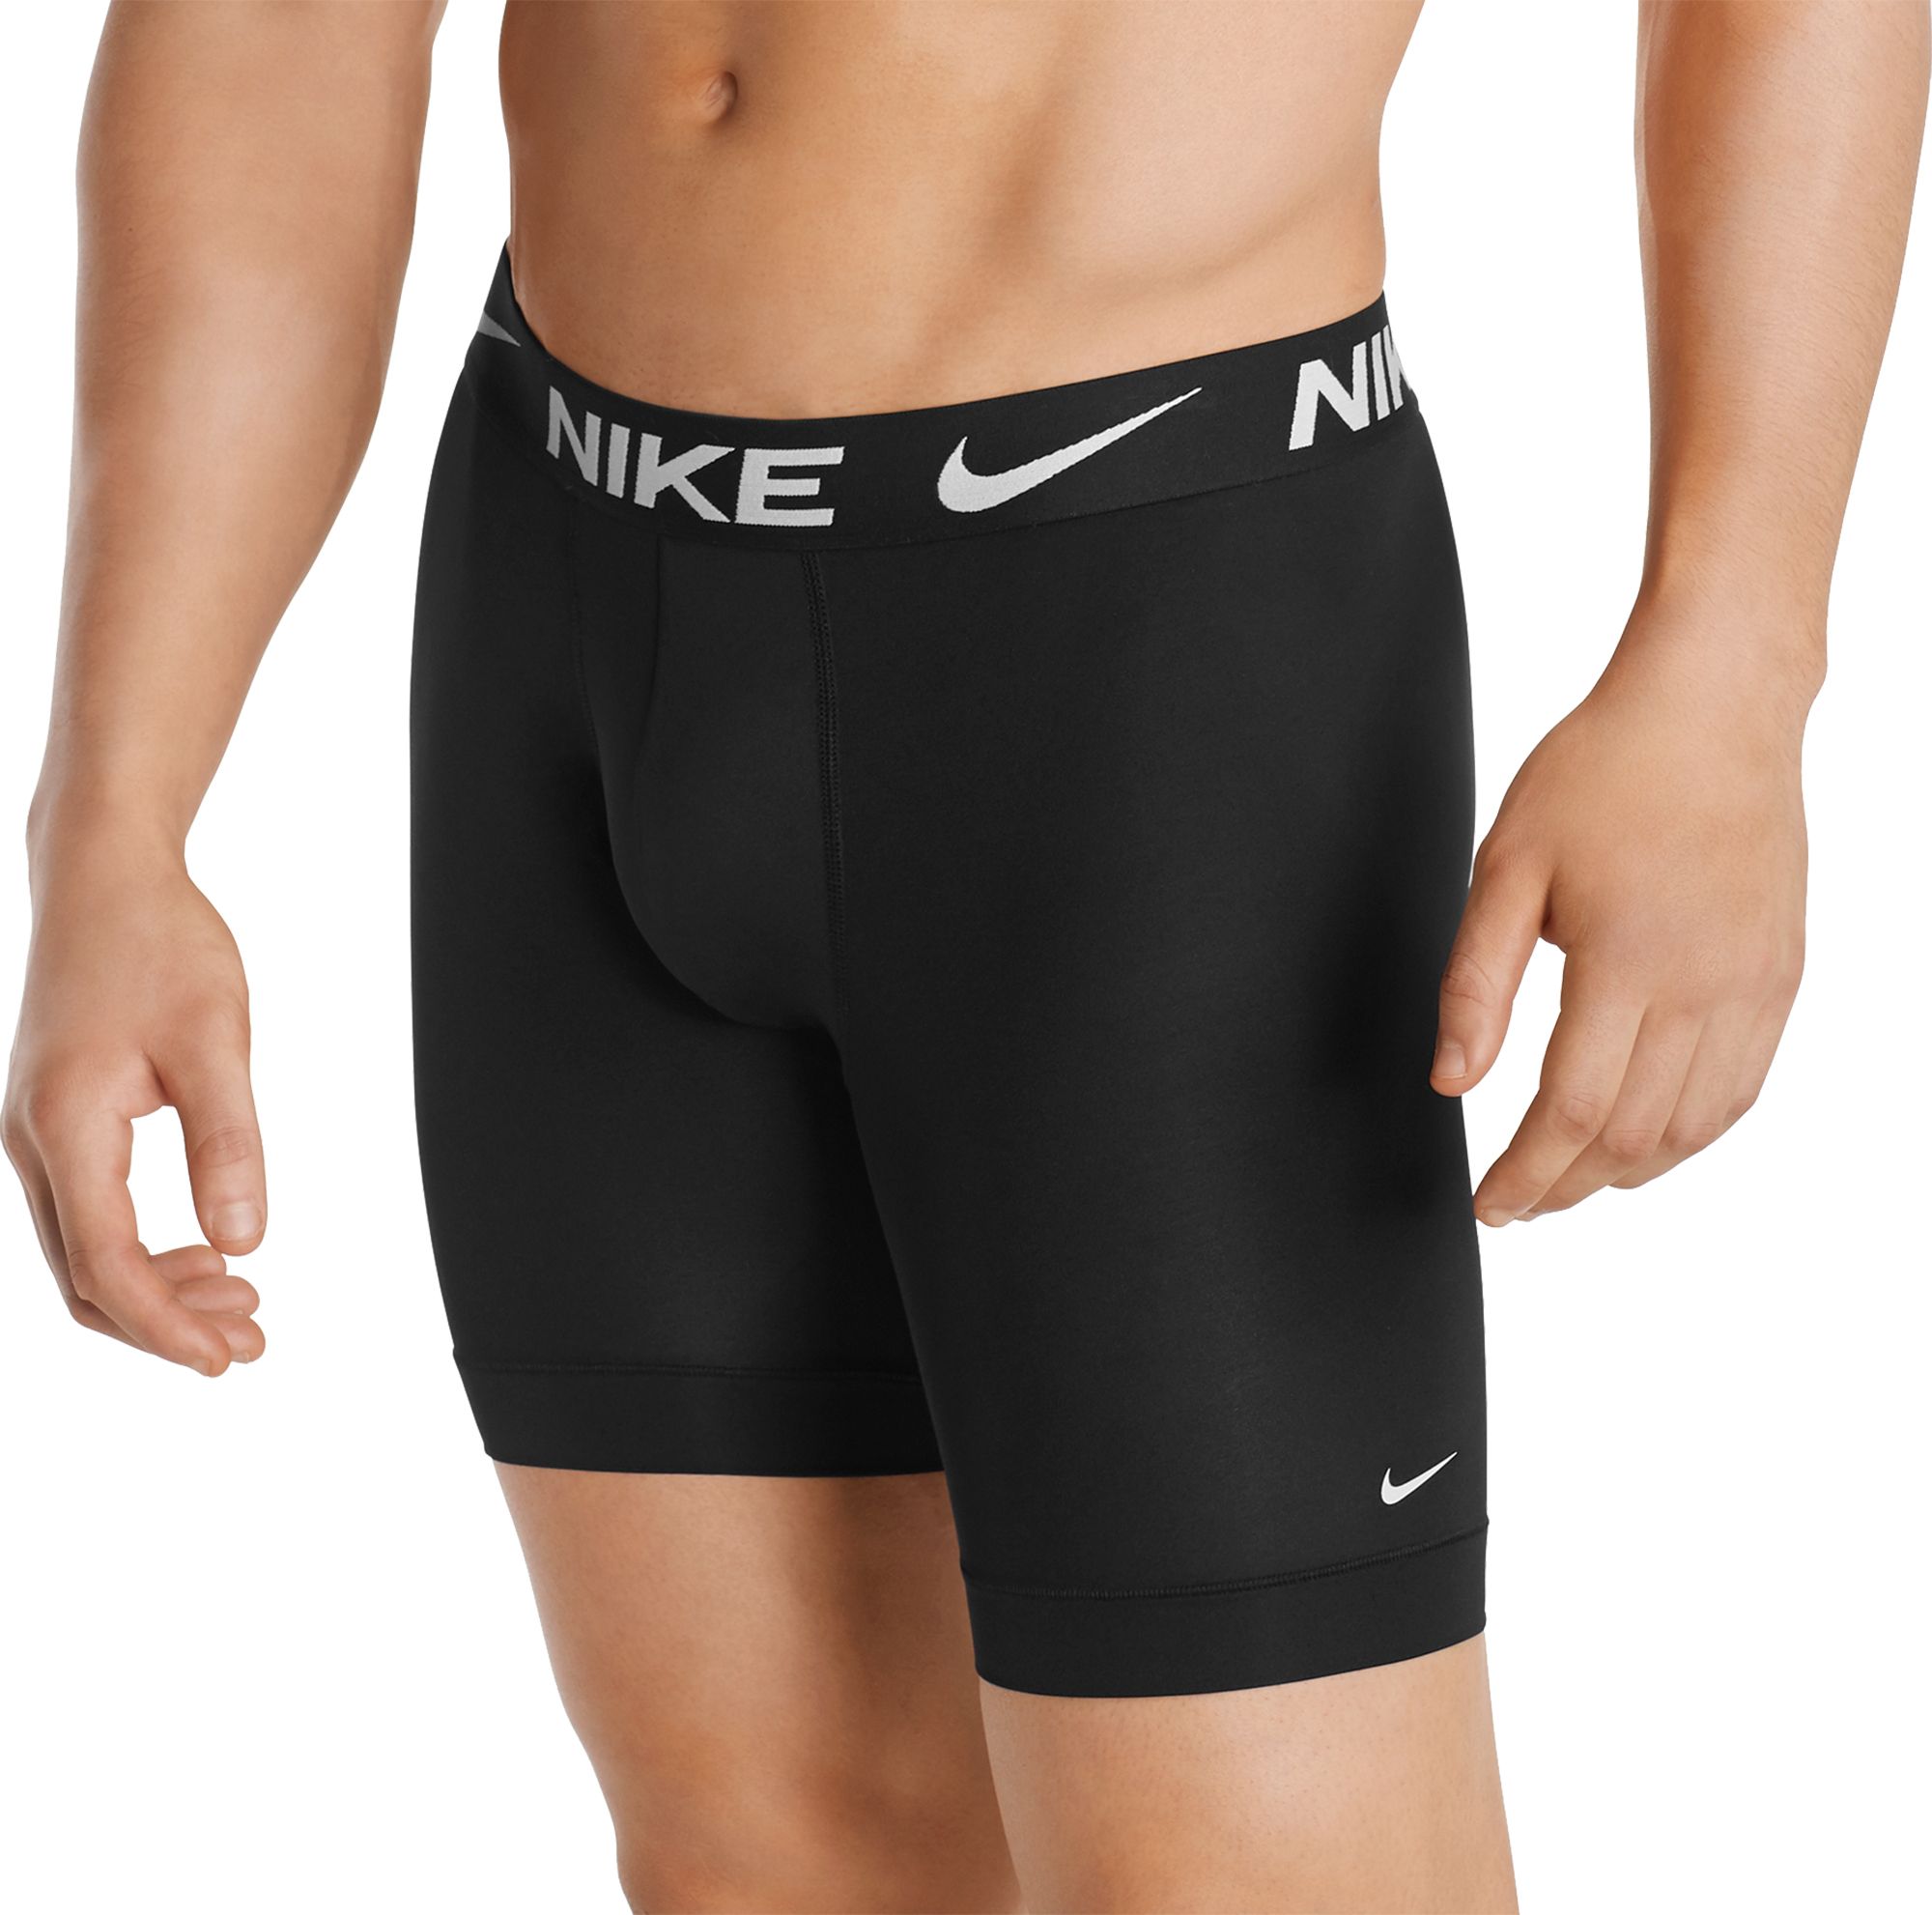 Nike Men's Essential Micro Long Boxer Briefs – 3 Pack - Big Apple Buddy